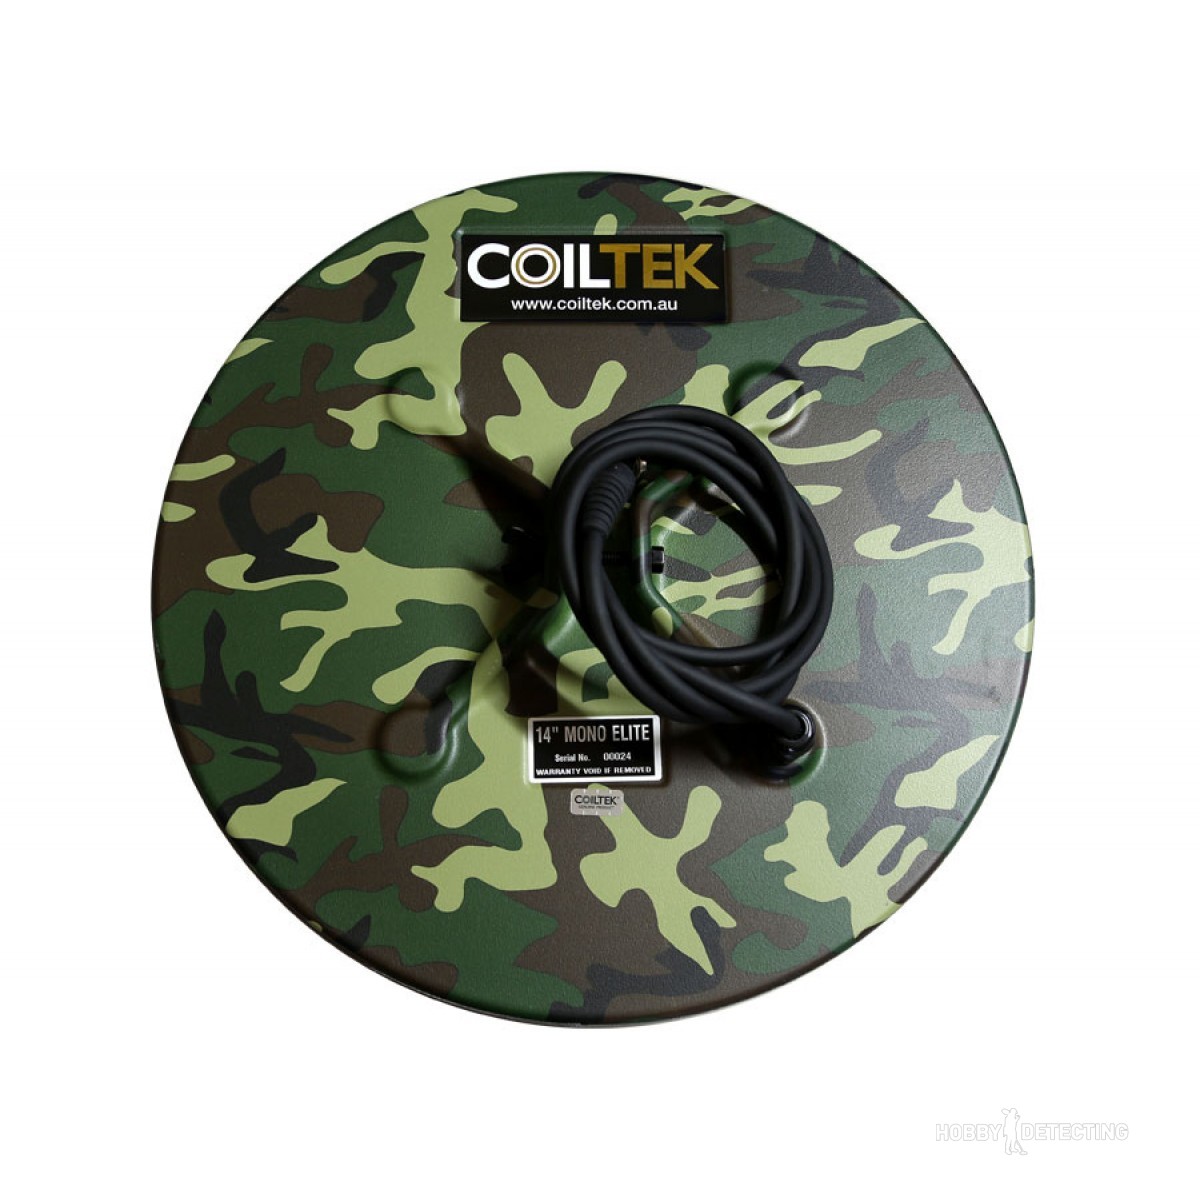 Coiltek 14 Mono Elite Coil